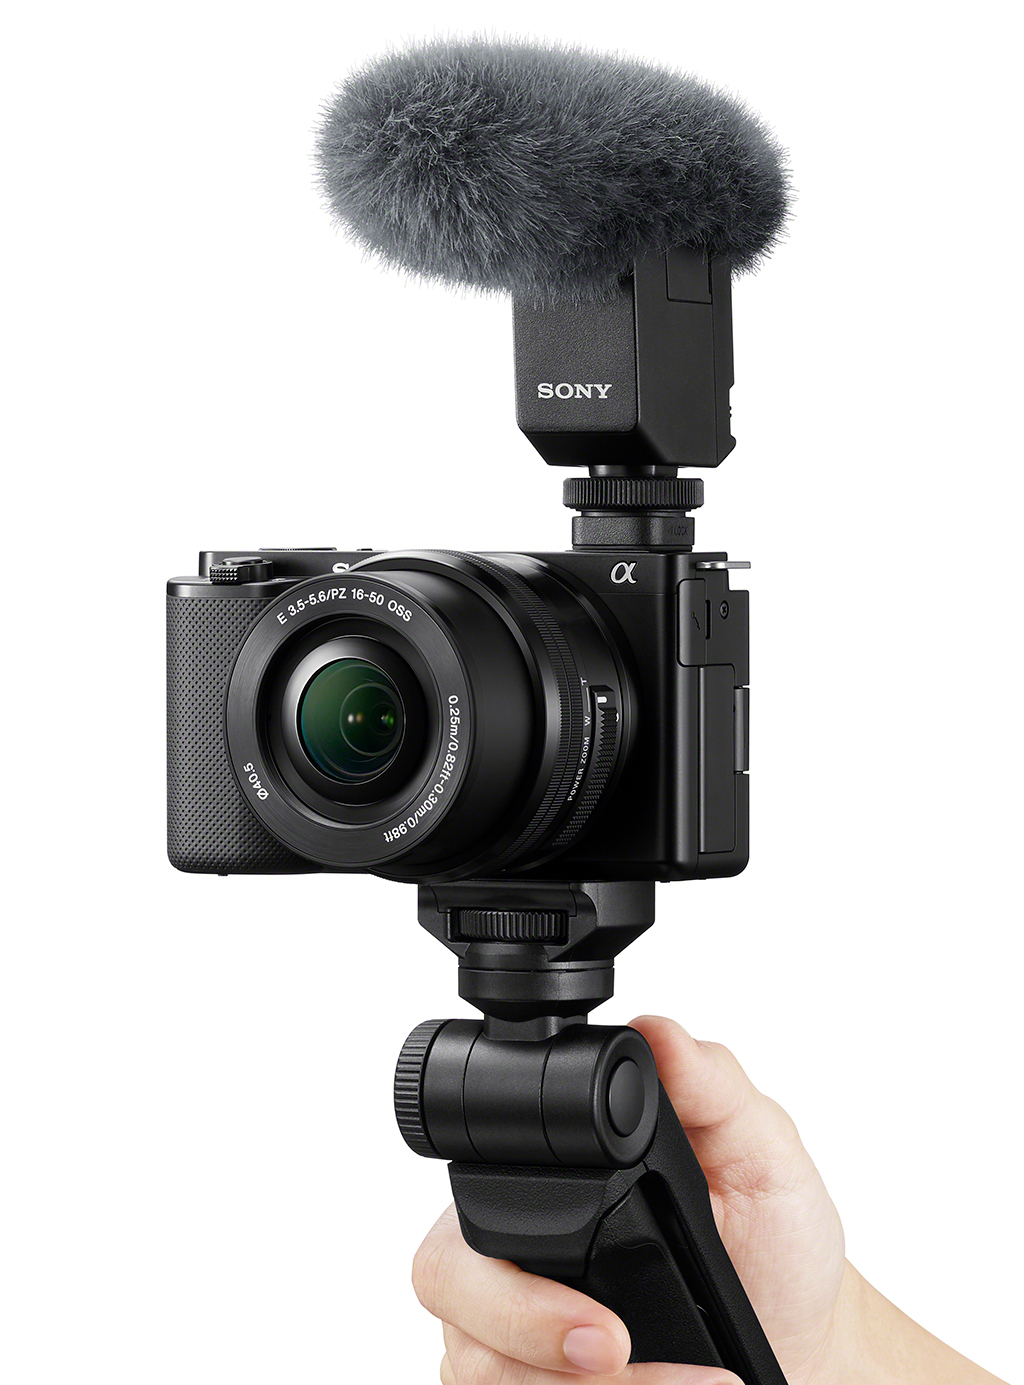 Introducing vlog camera ZV-E10, Sony